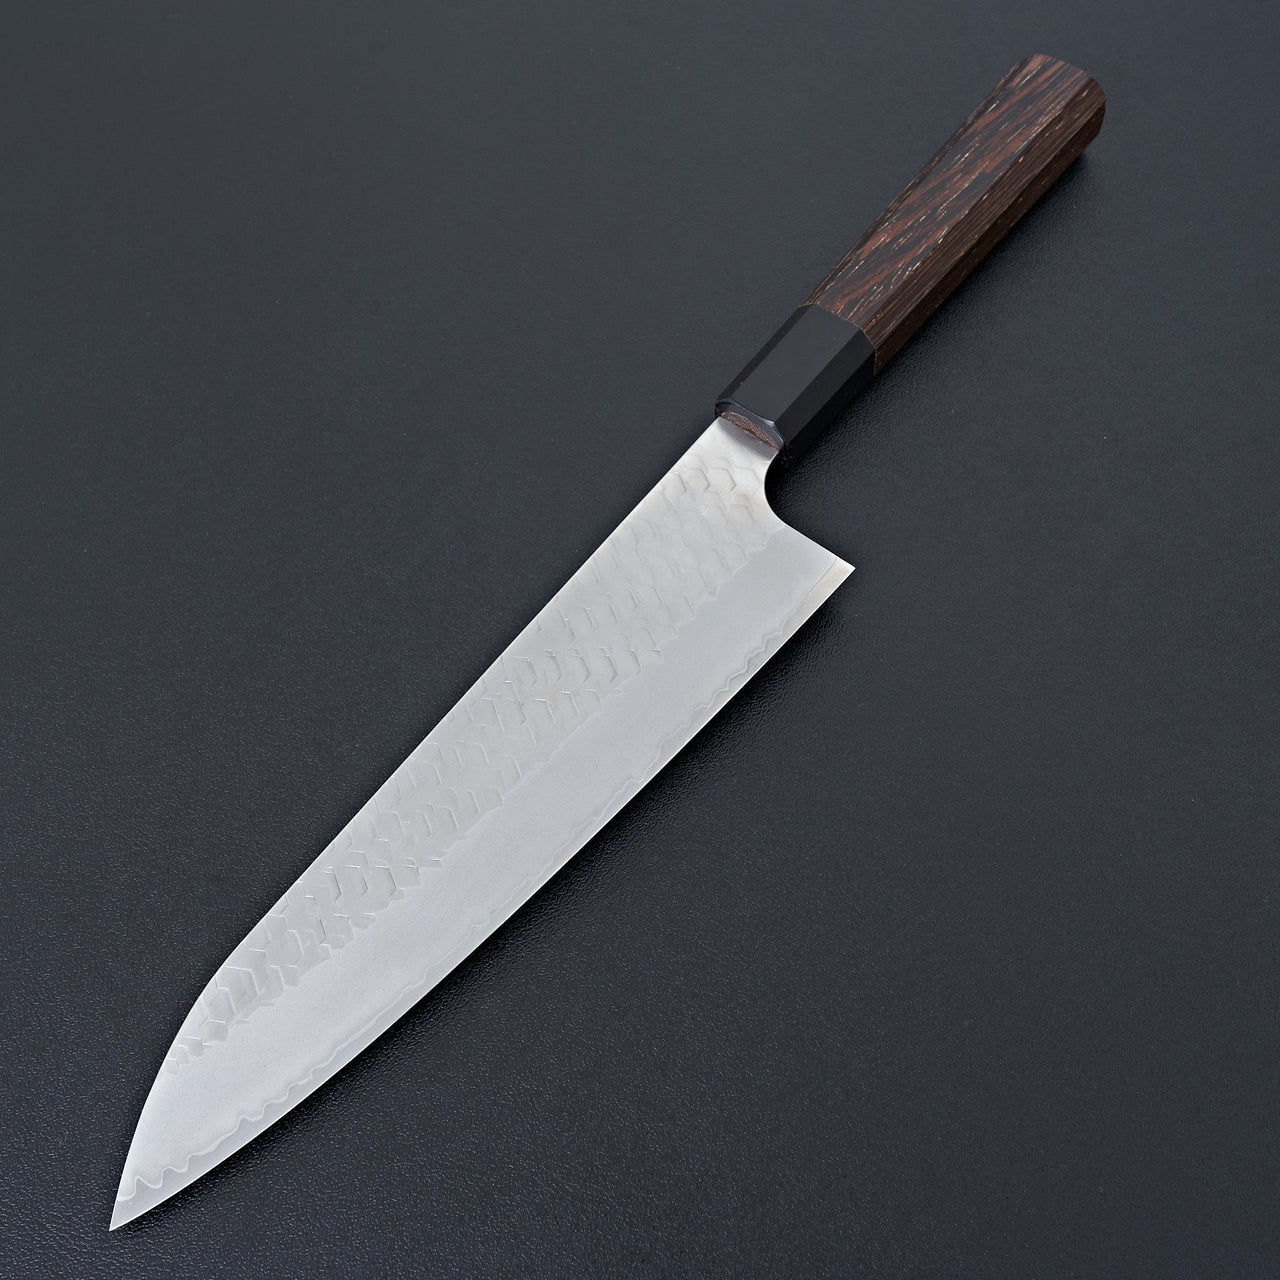 https://cdn.shopify.com/s/files/1/1354/6027/files/Nigara-Hamono-SG2-Migaki-Tsuchime-Gyuto-210mm-Knife-Handk-chef-culinary-japanese-knife-knives-2.jpg?v=1704377079&width=1280